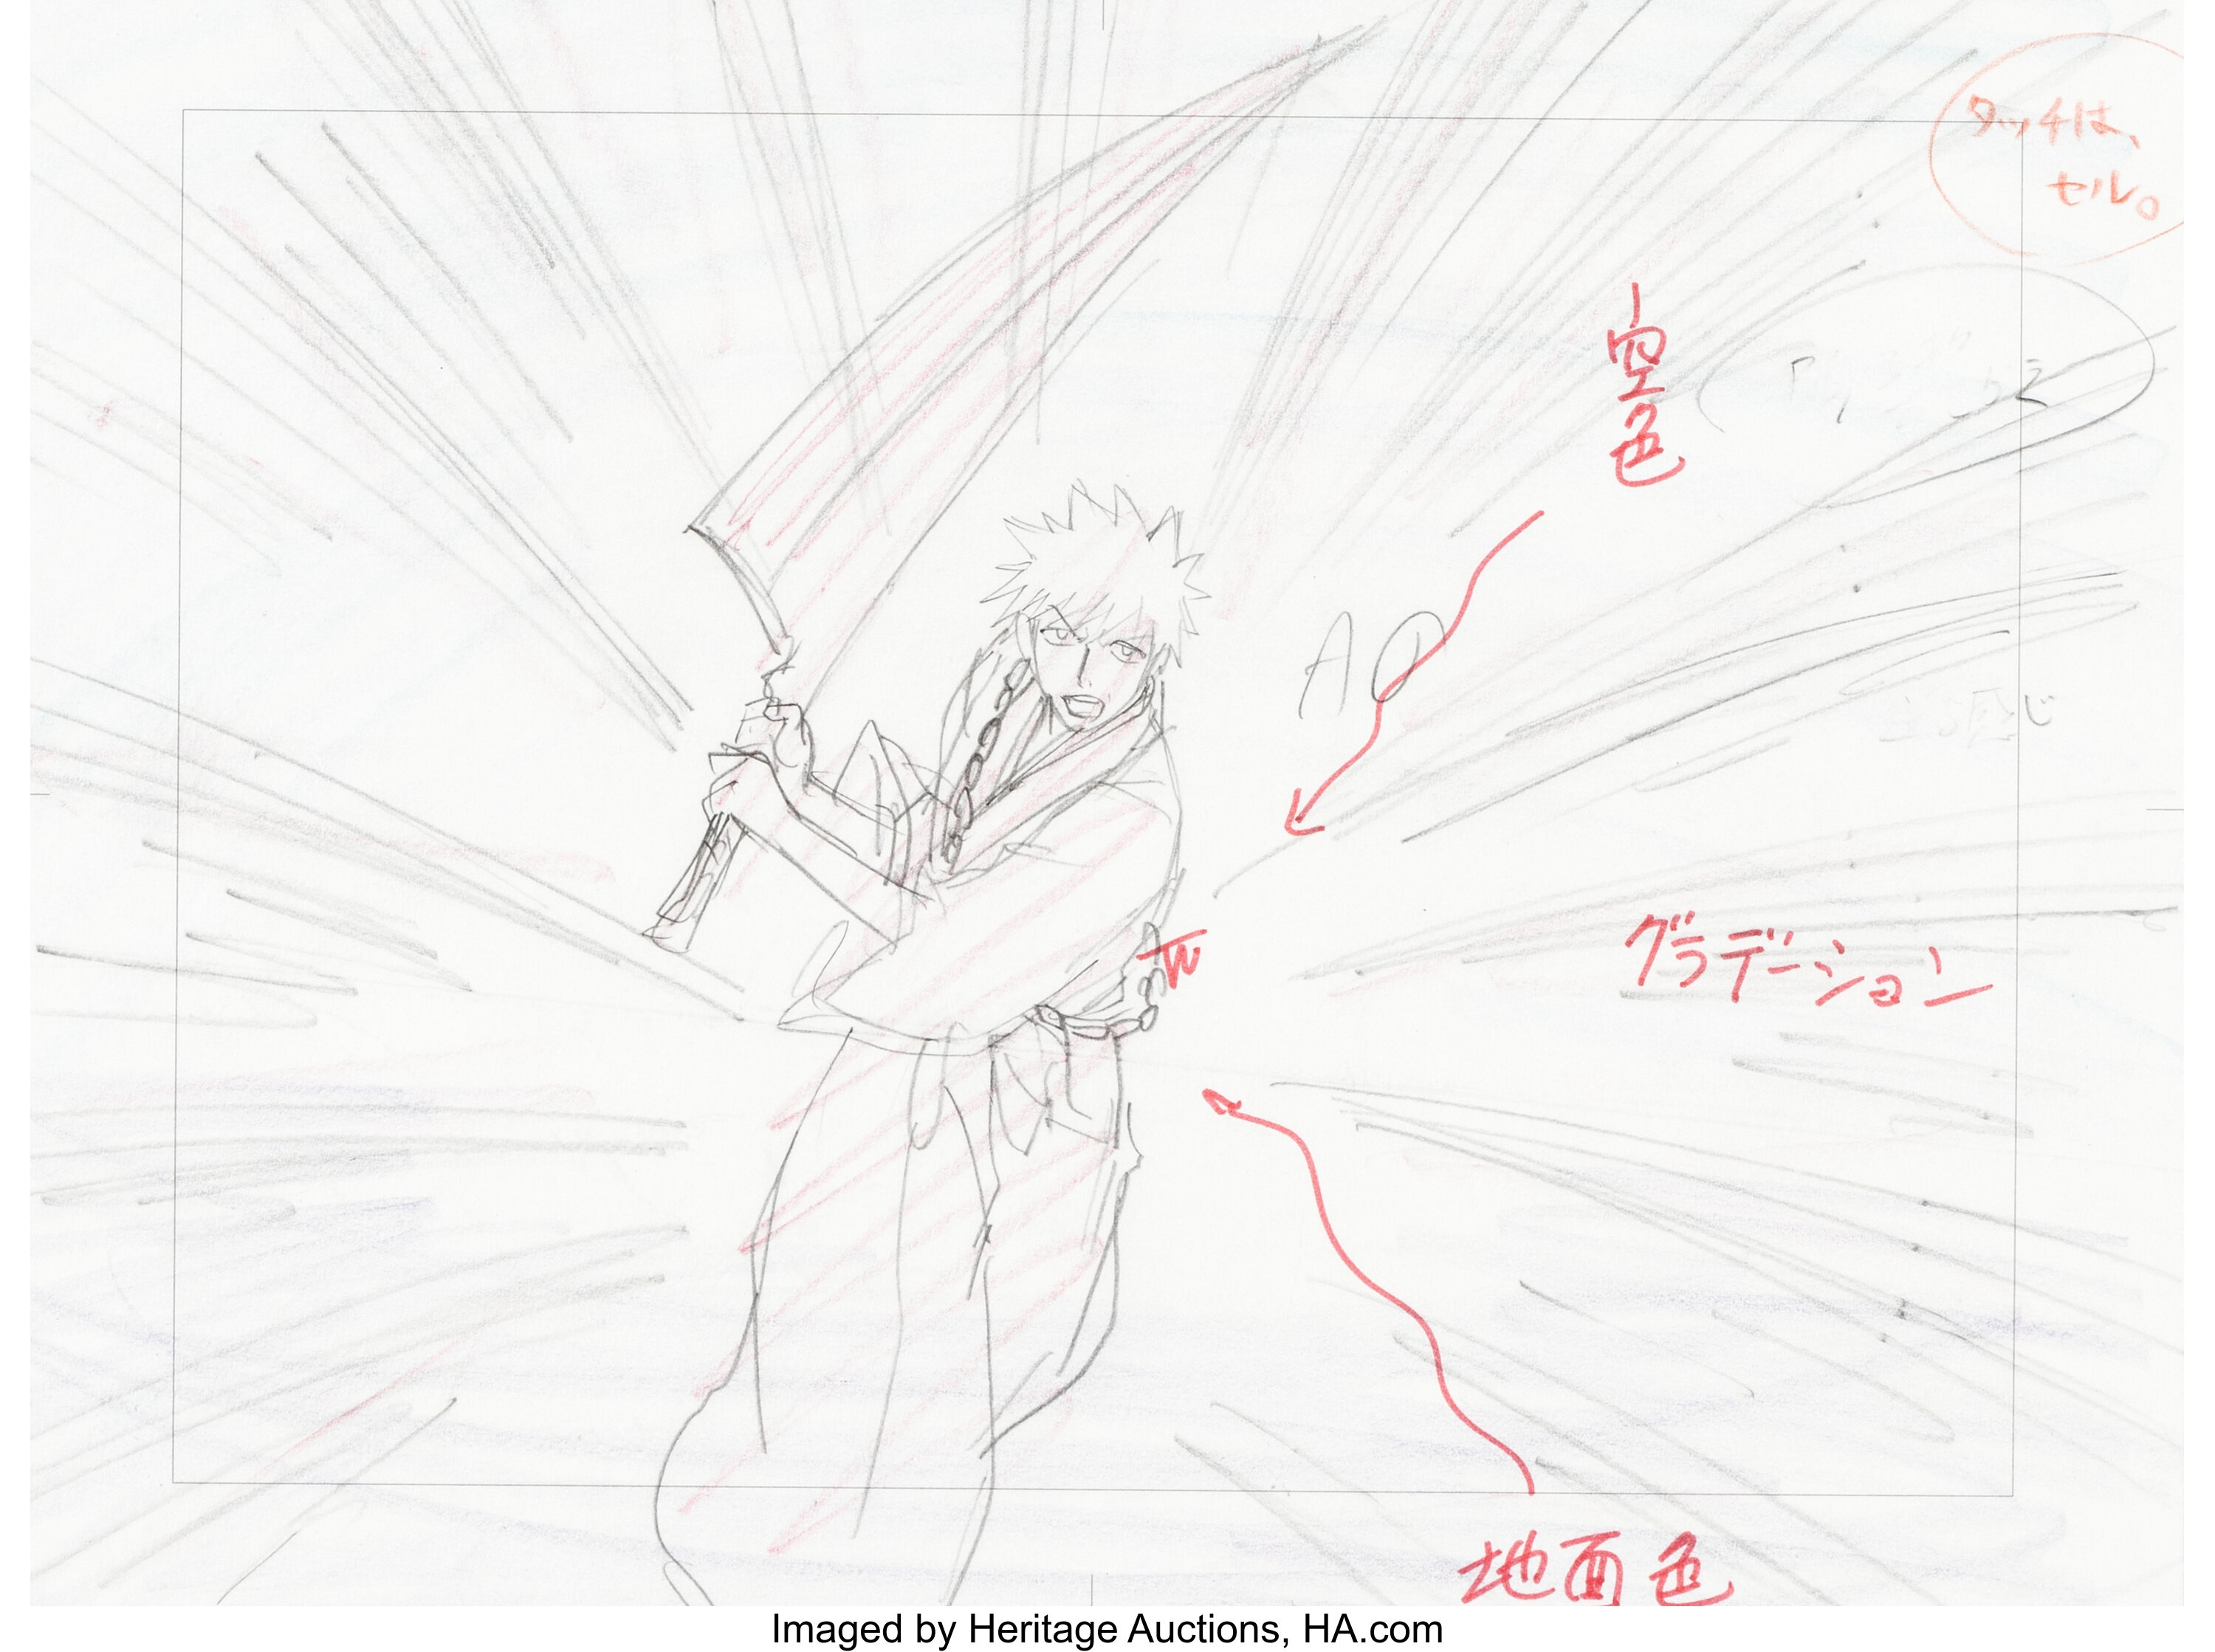 Bleach Ichigo Kurosaki Animation Drawing and Production Background | Lot  #19319 | Heritage Auctions